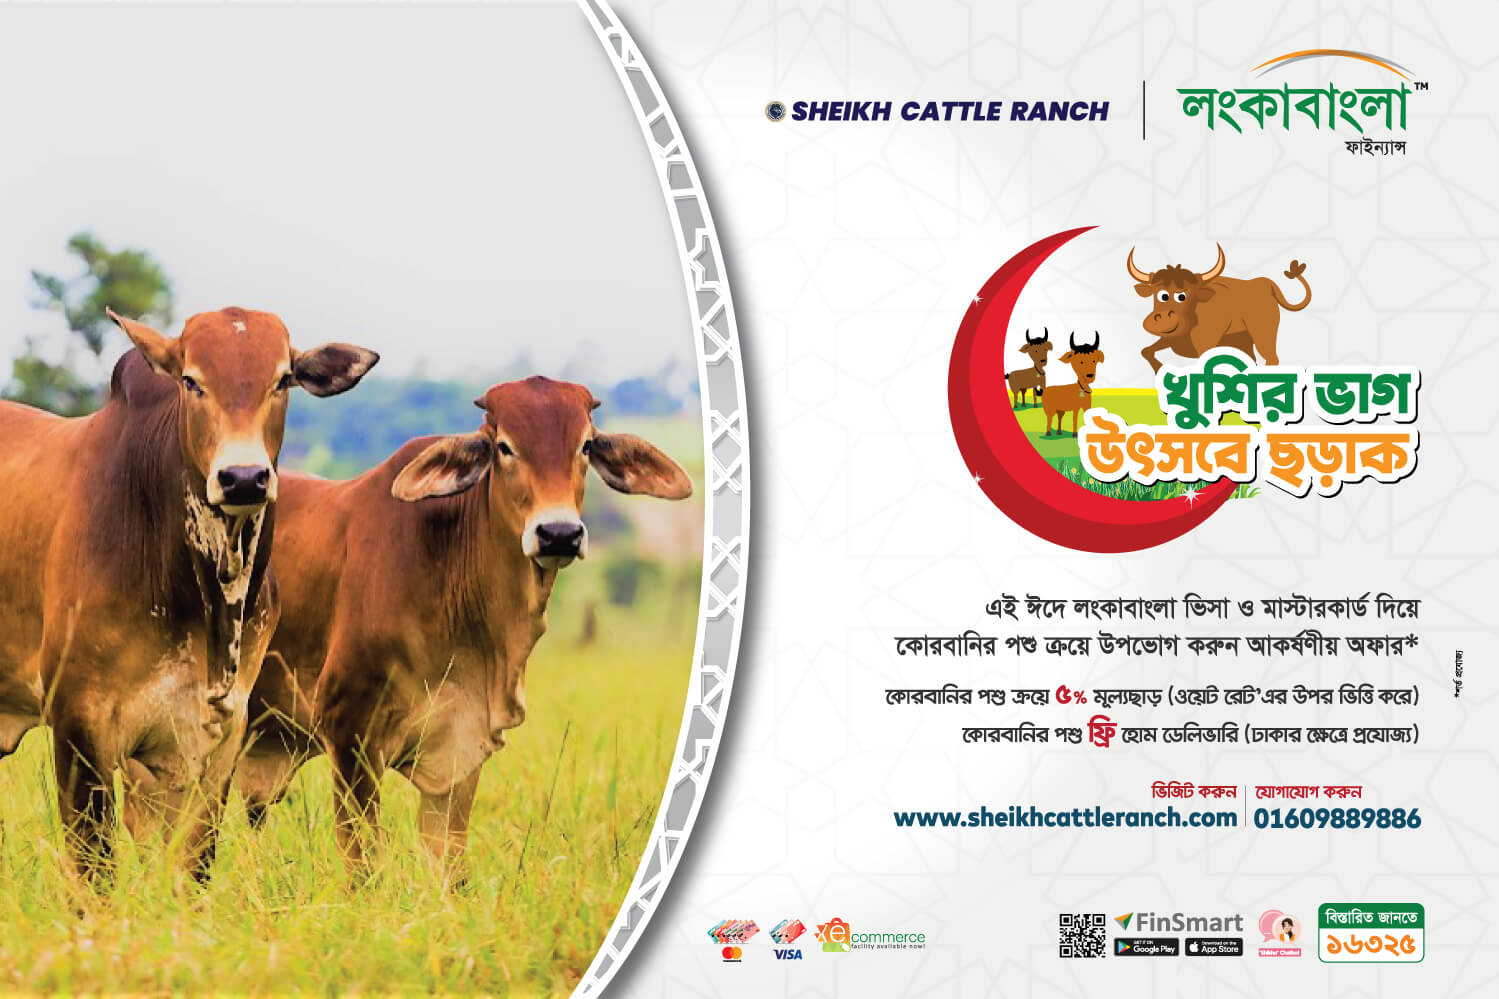 LBFL Eid Ul Adha Cattle Offer at Sheikh Cattle